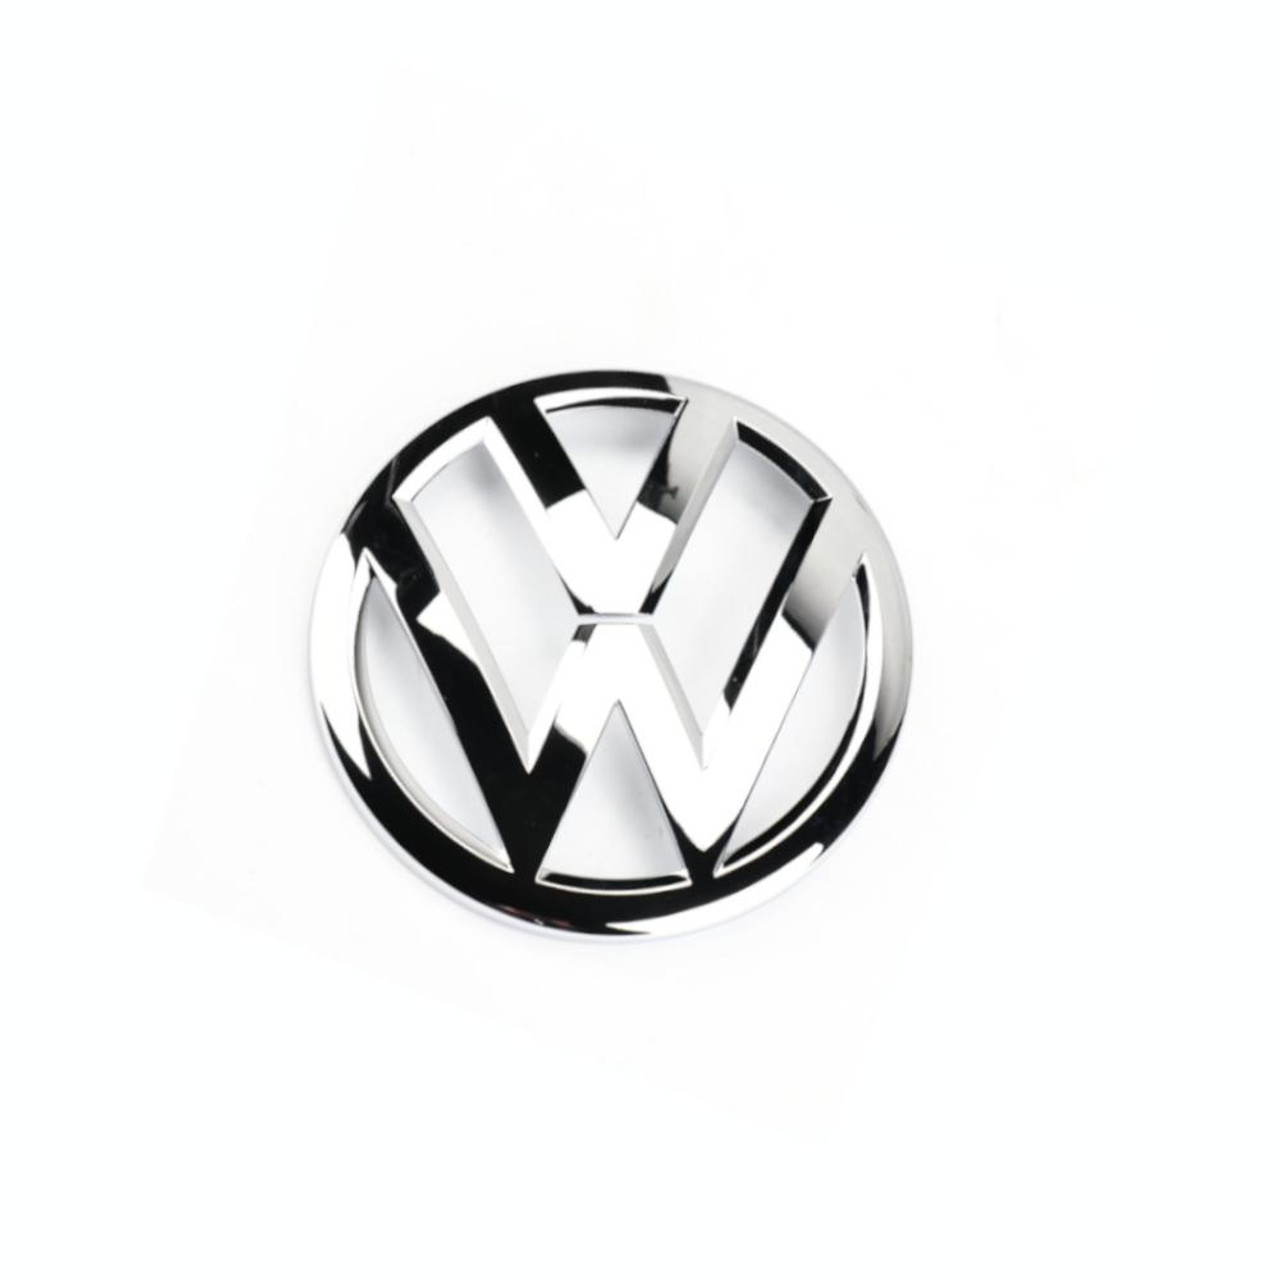 LOGO VW ARRIÈRE GOLF VII 7 MK7 NOIR BRILLANT ORIGINAL 5G08536012ZZ